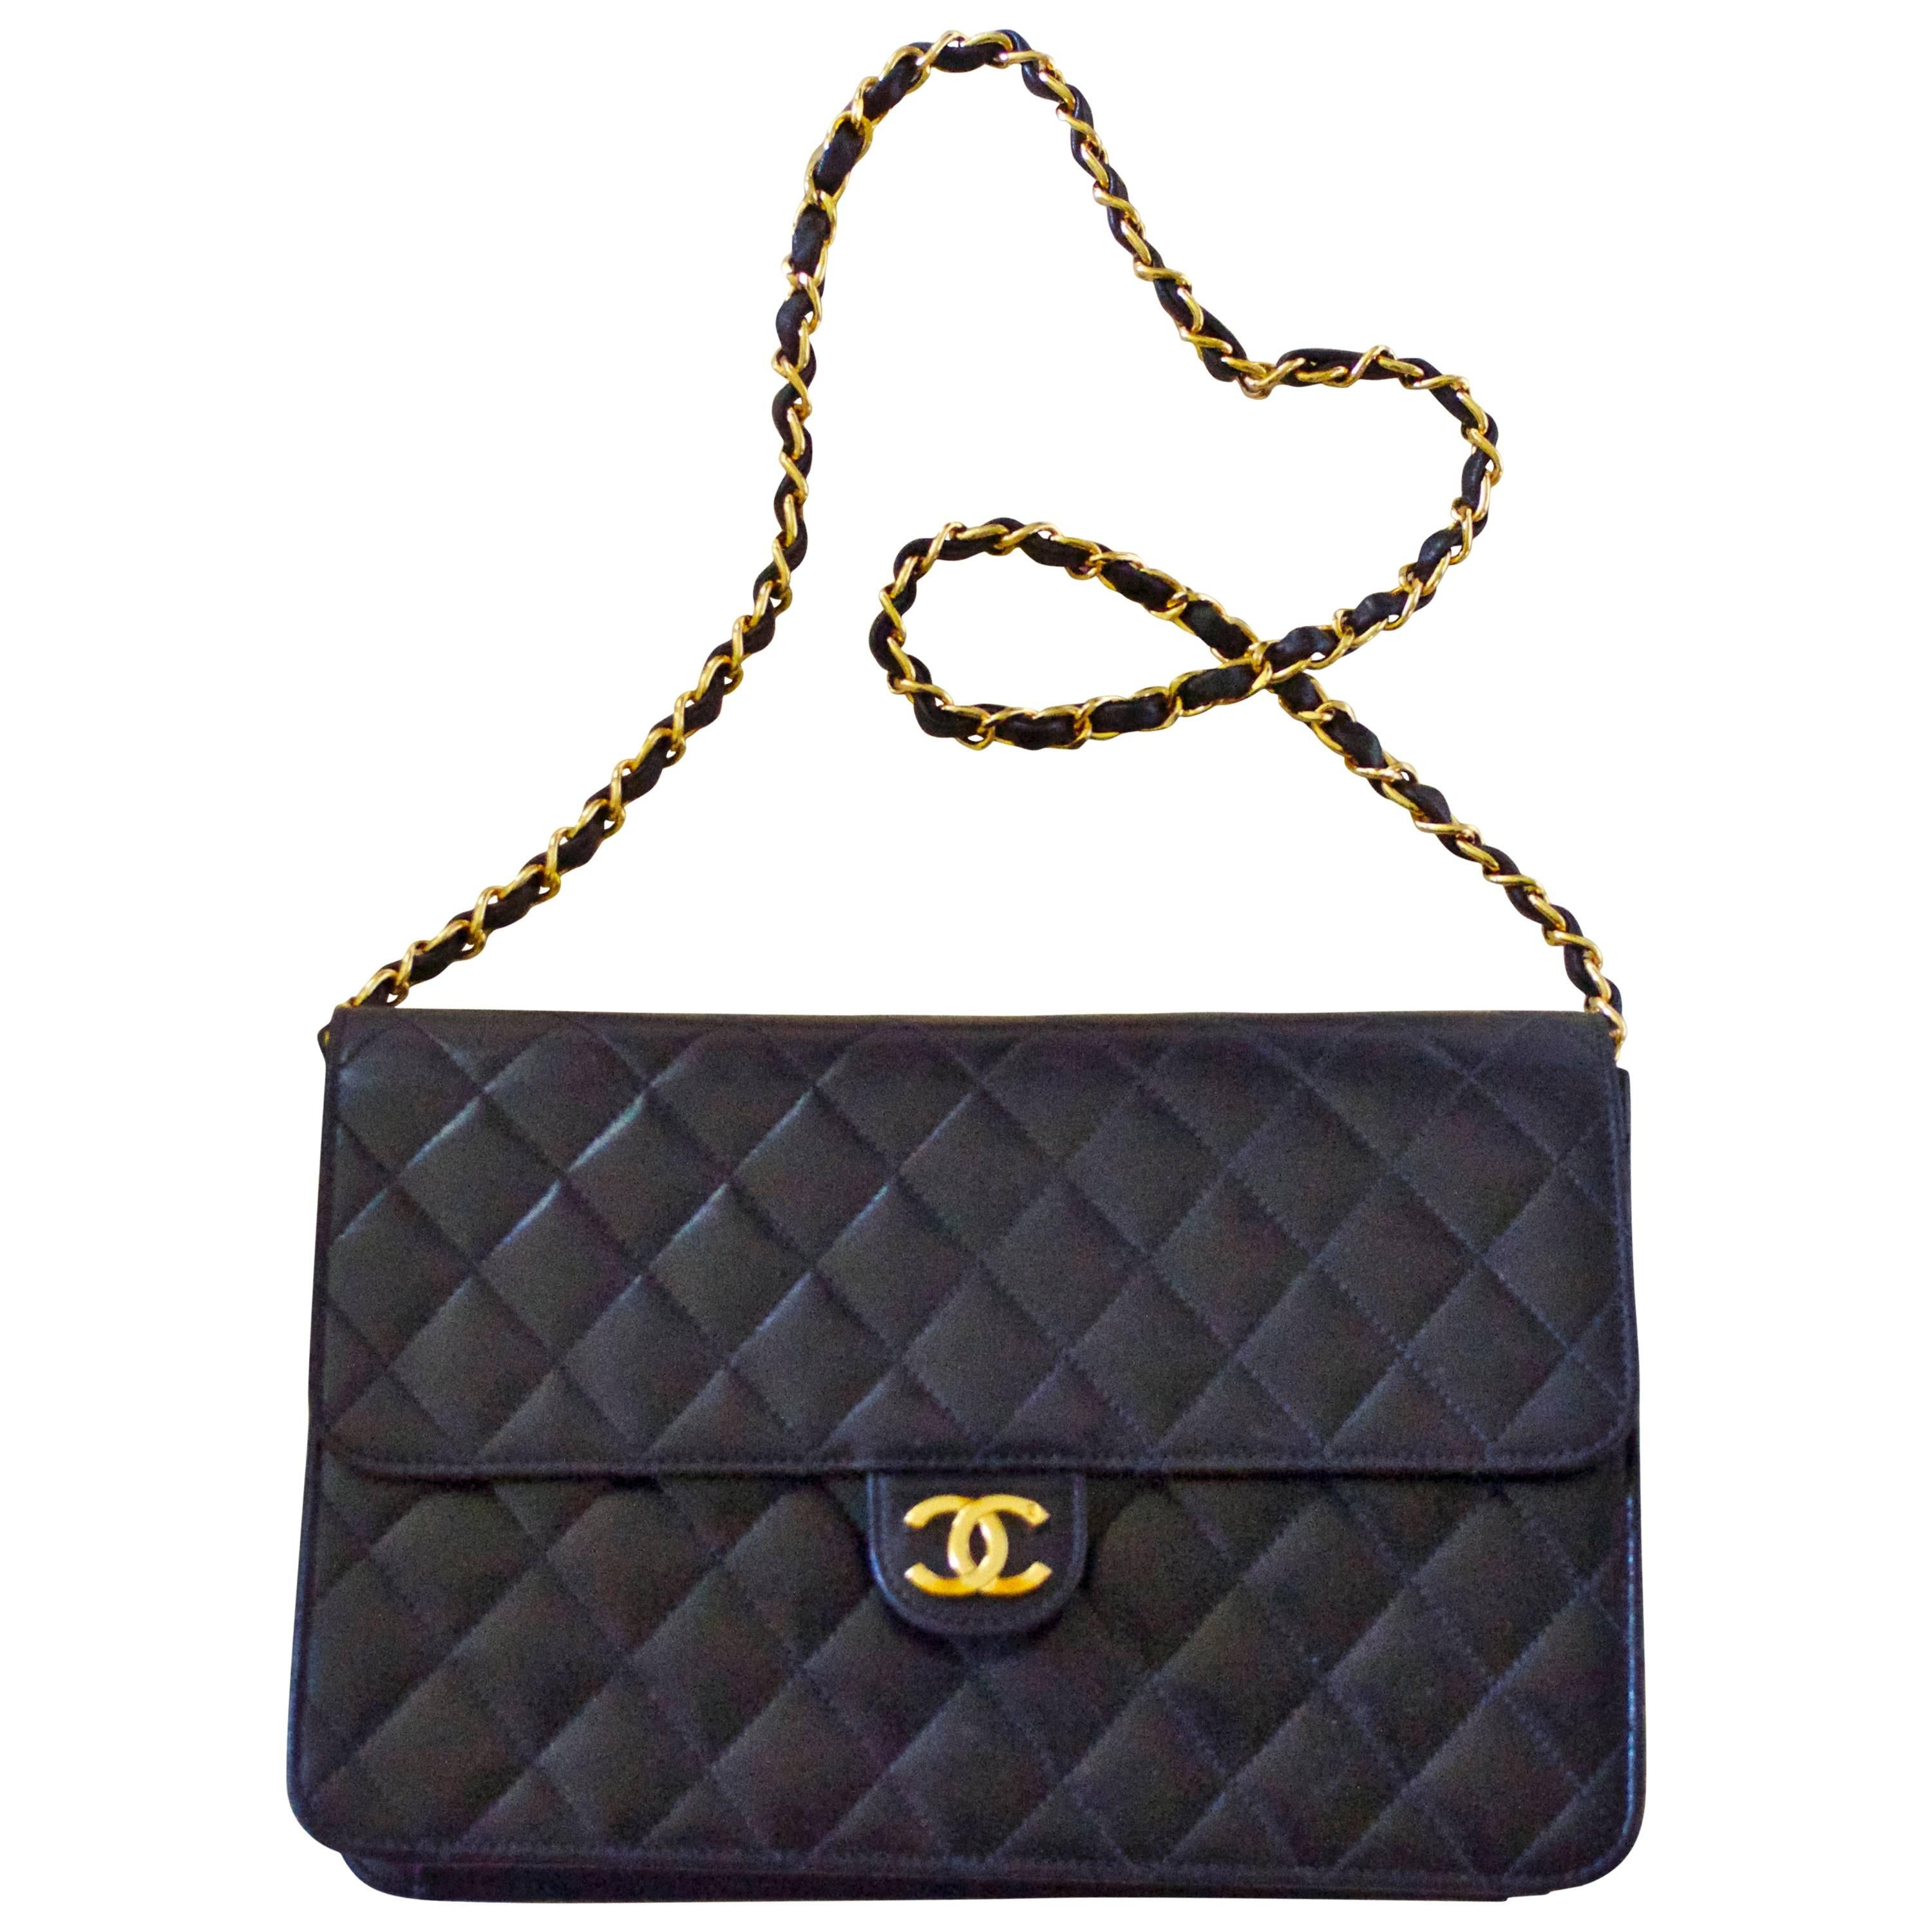 Classic Chanel Handbag For Sale